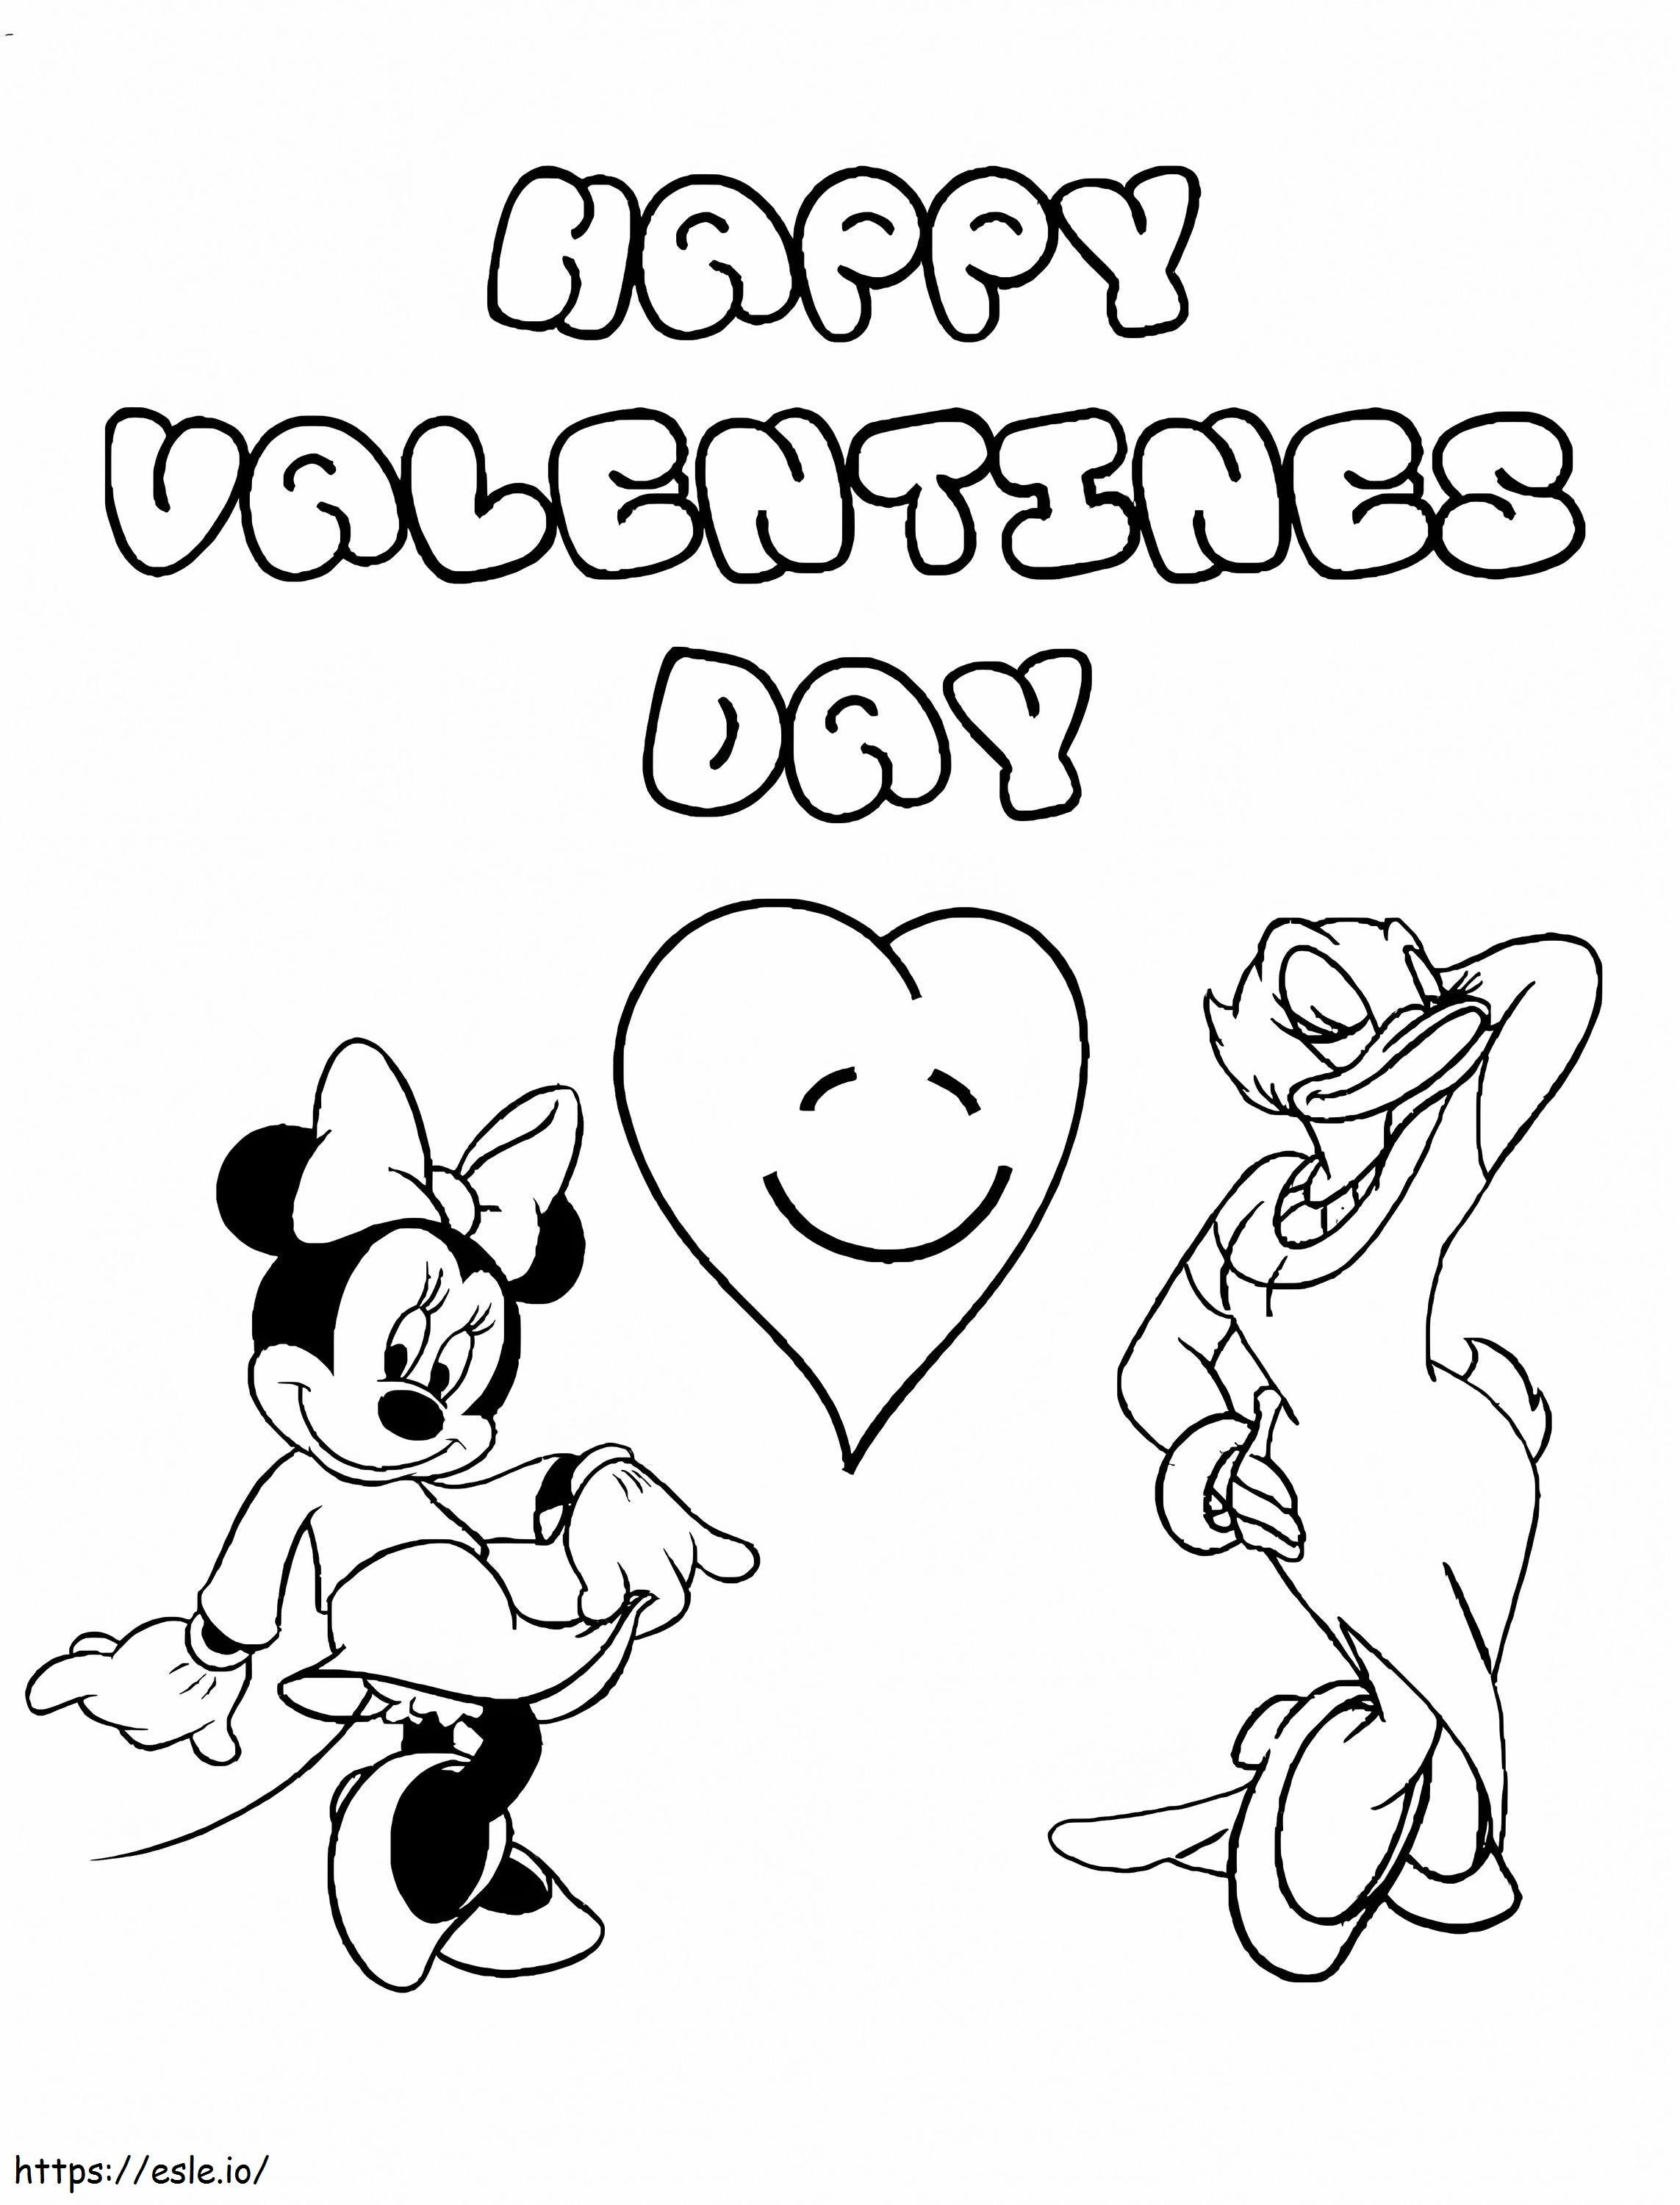 Margarida e Minnie Mouse Disney Valentine para colorir